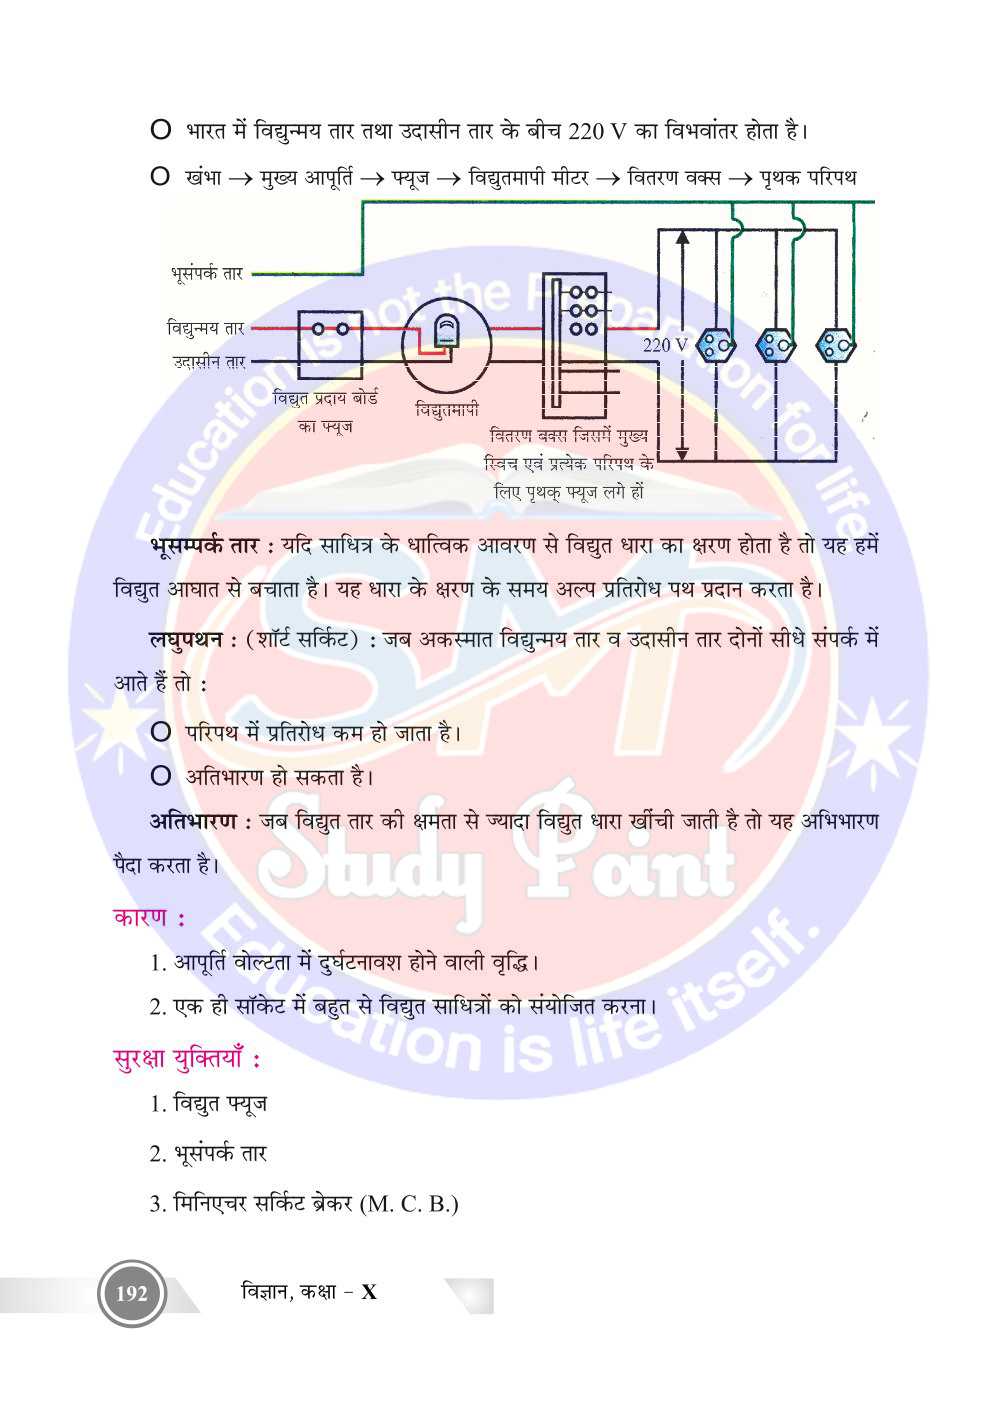 Bihar Board Class 10th Physics  Magnetic Effect of Electric Current  Class 10 Physics Rivision Notes PDF  विद्युत धारा के चुम्बकीय प्रभाव  बिहार बोर्ड क्लास 10वीं भौतिकी नोट्स  कक्षा 10 भौतिकी हिंदी में नोट्स